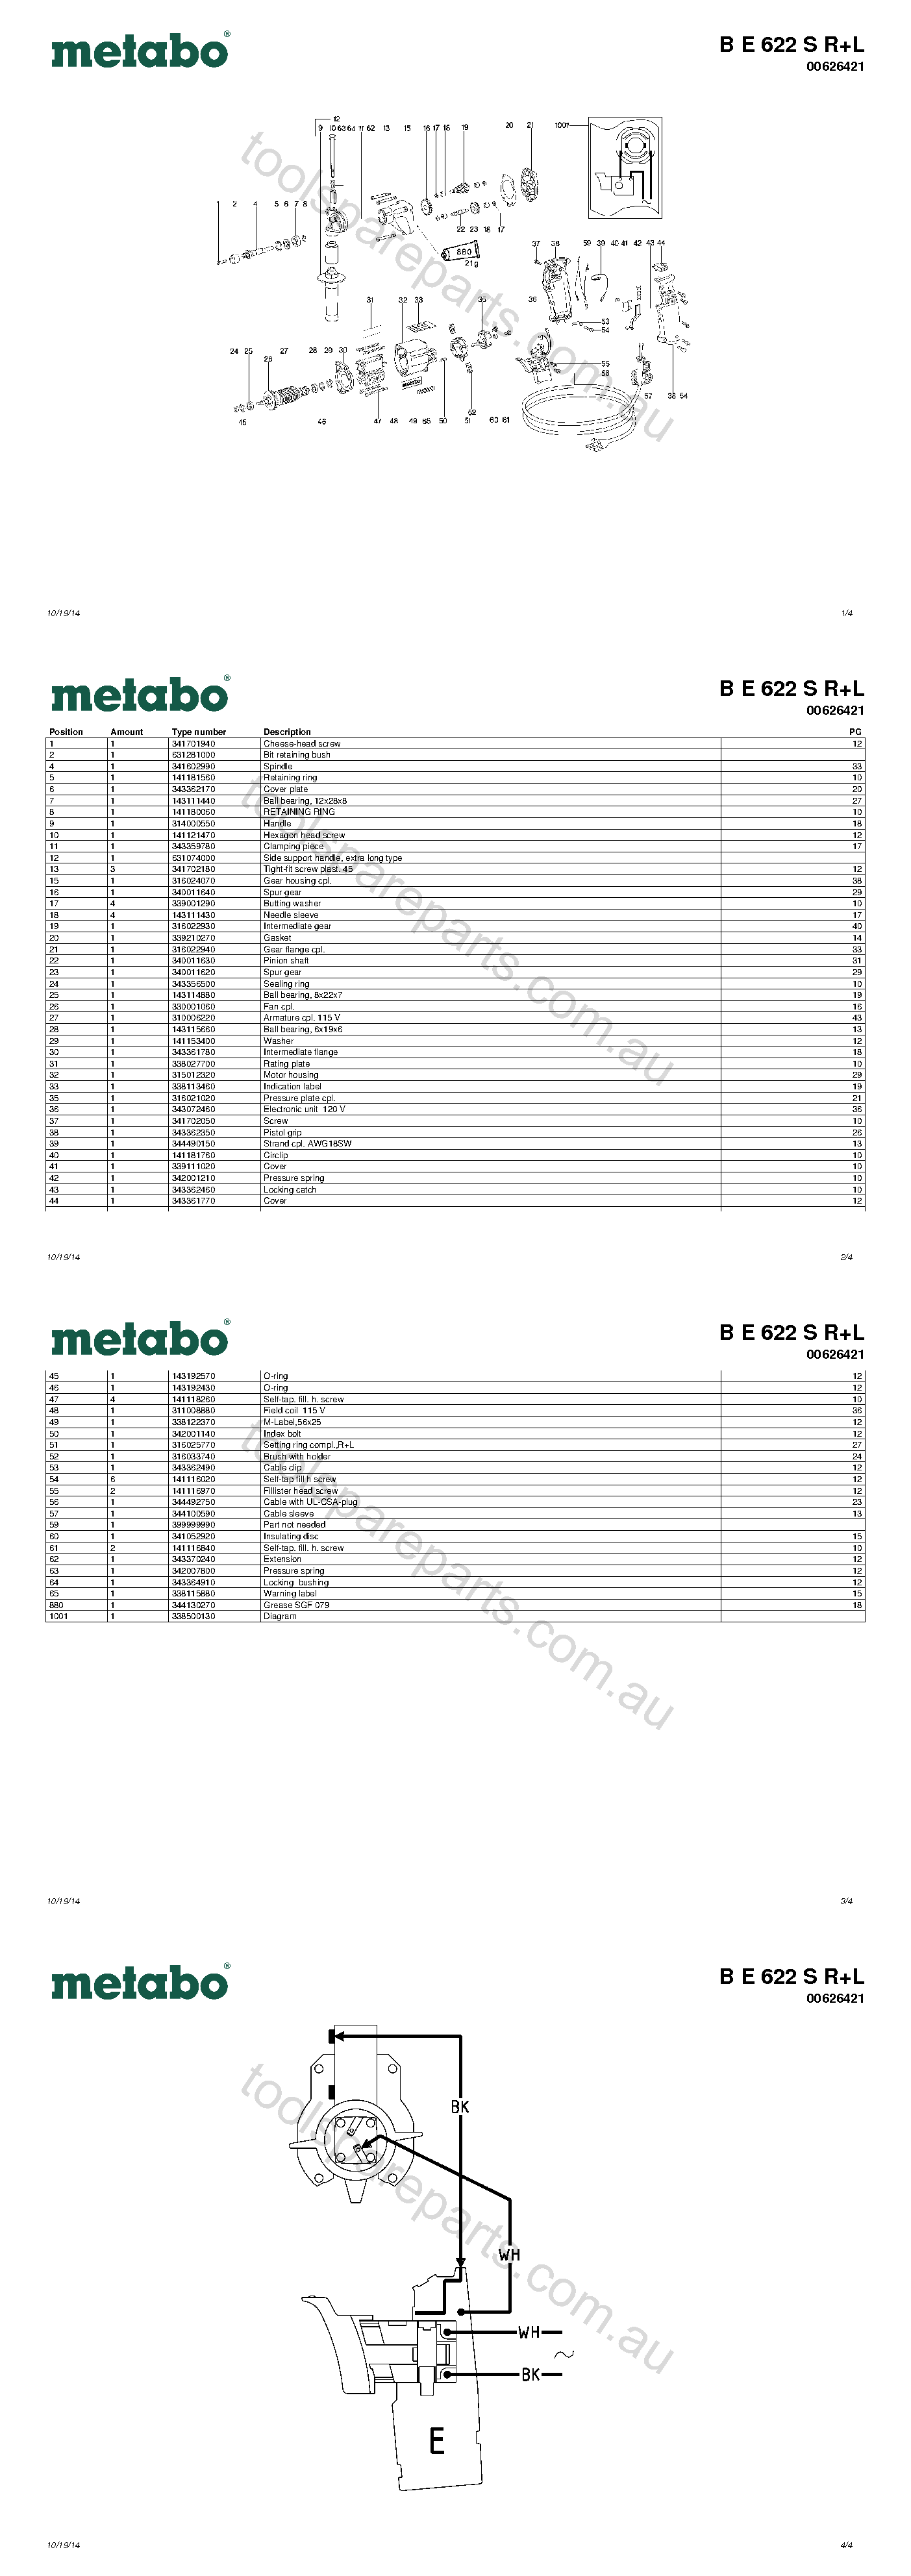 Metabo B E 622 S R+L 00626421  Diagram 1